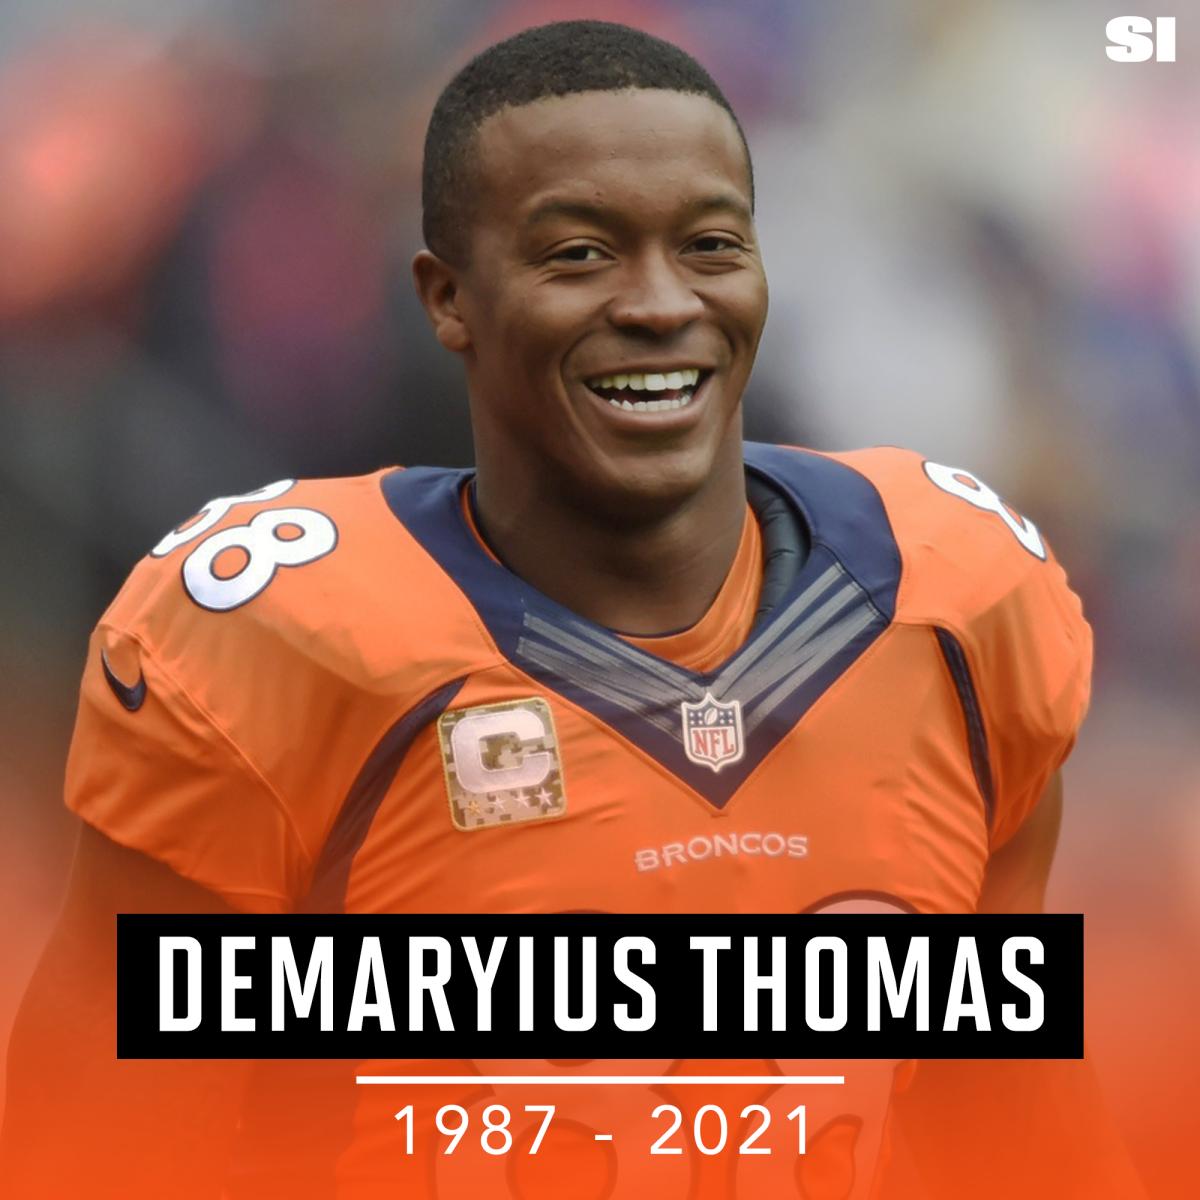 Broncos star Demaryius Thomas died at 33 years old.